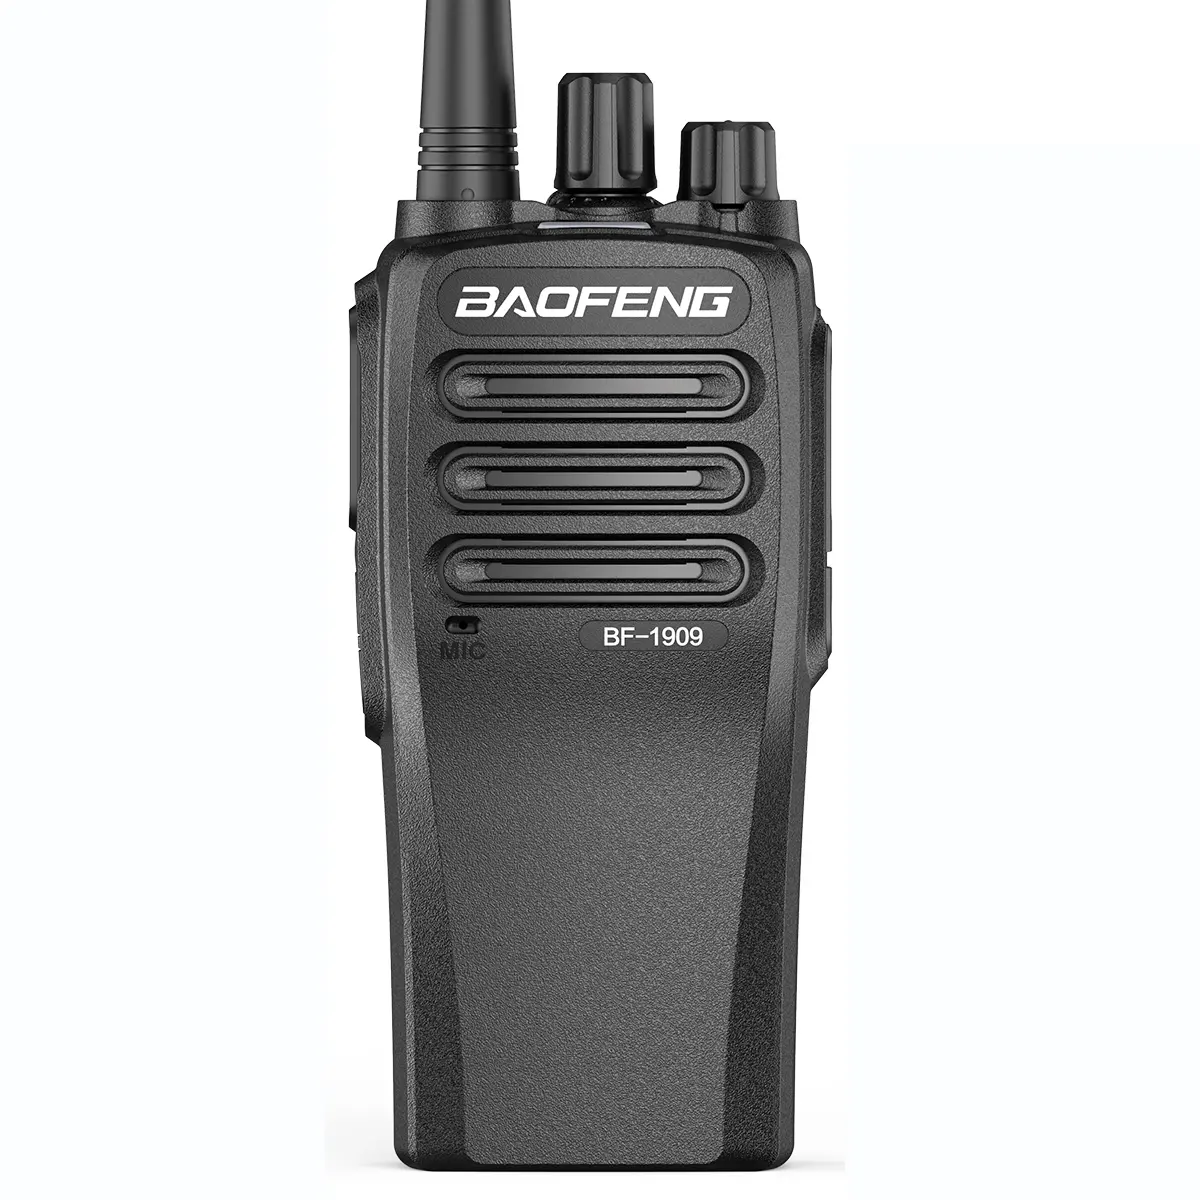 Baofeng BF-1909 UHF radio ham long range two-way radio 10W handheld walkie talkie 400-470MHz radio Anti-shock walkietalkie